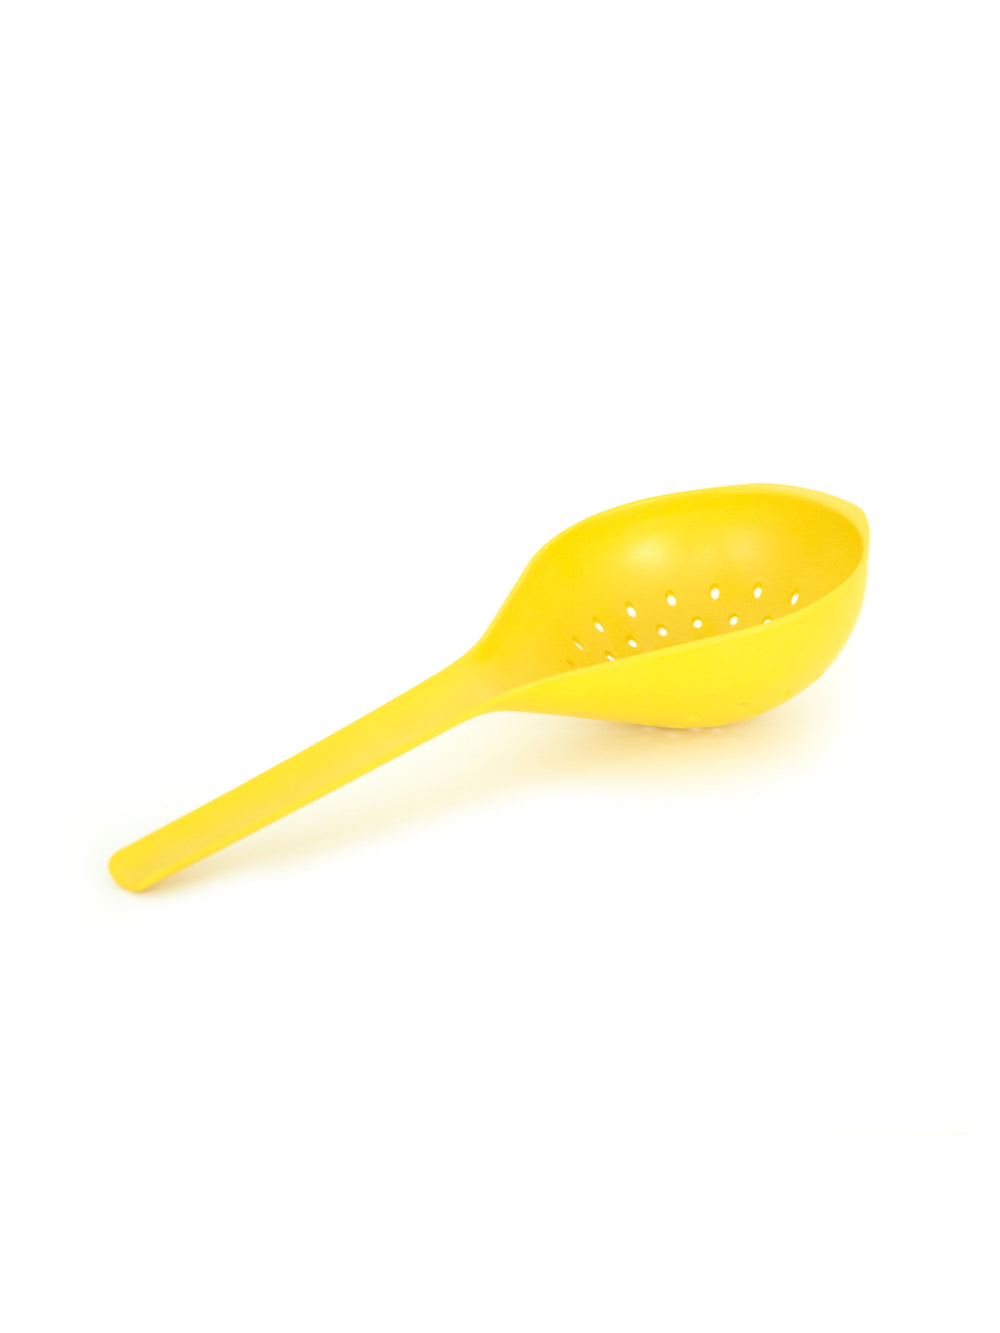 EKOBO - Measuring Spoon Set (Lemon)